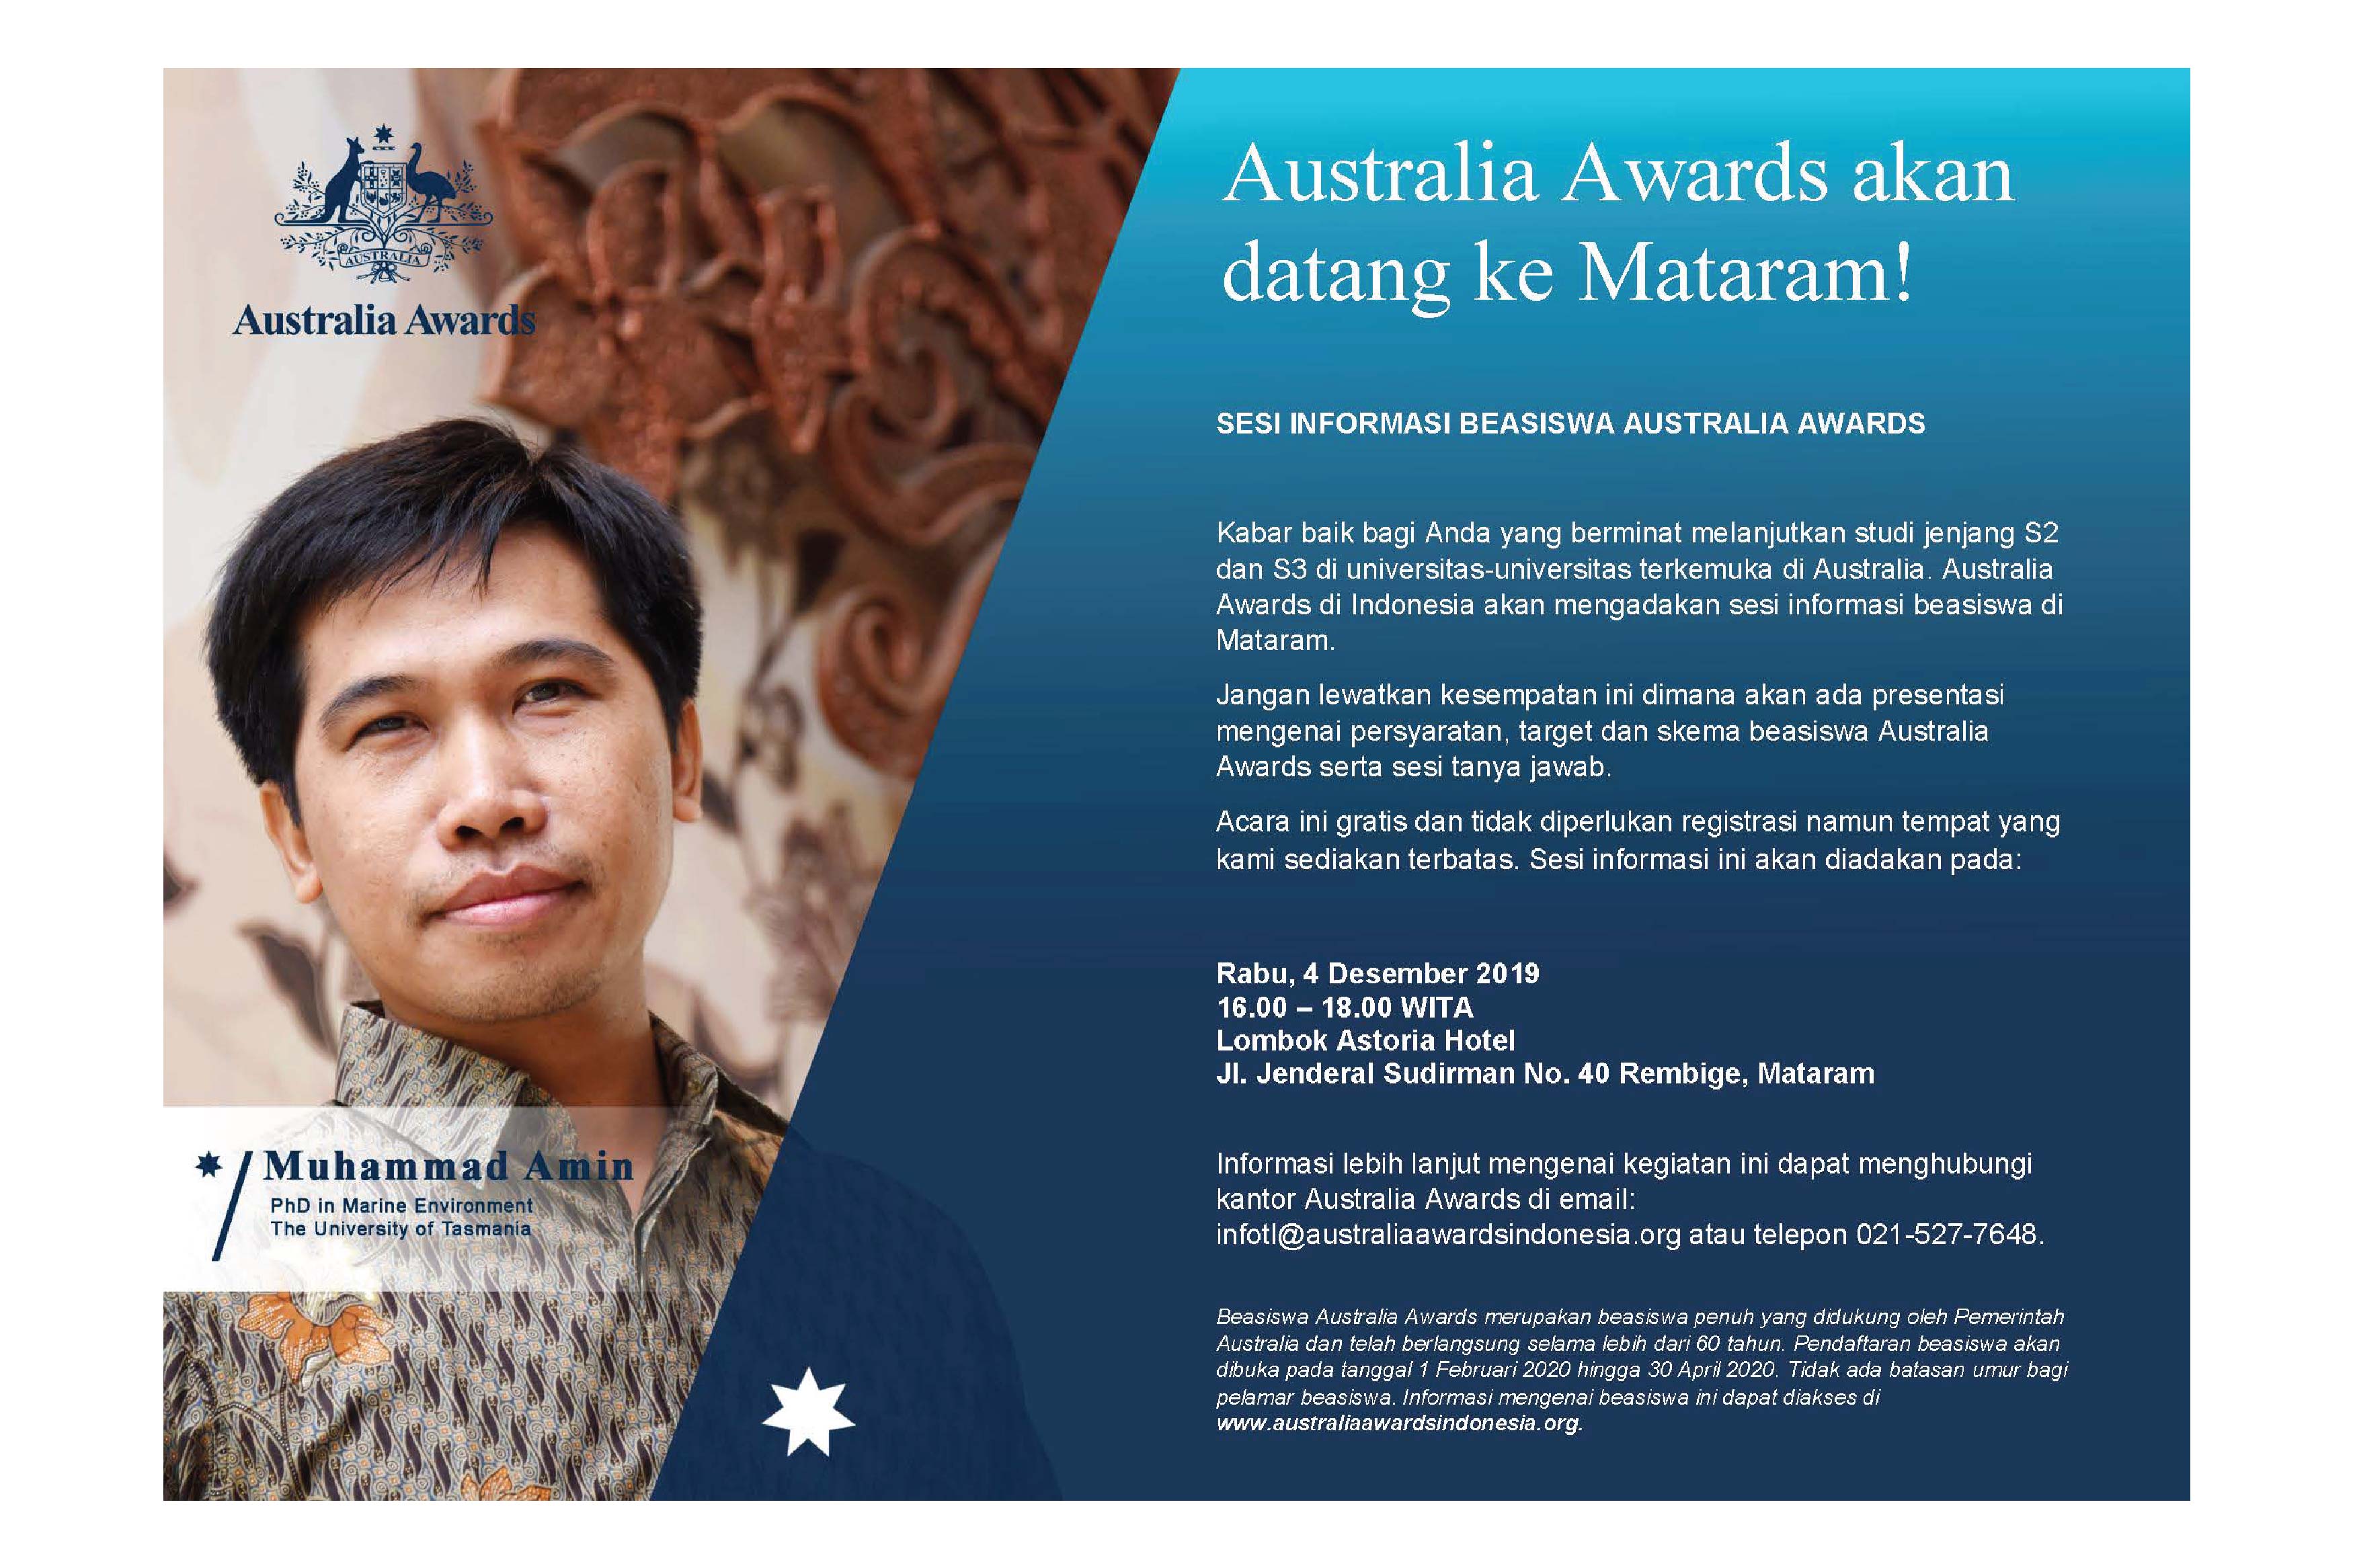 Australia Awards Postgraduate Scholarships Info Session in Mataram